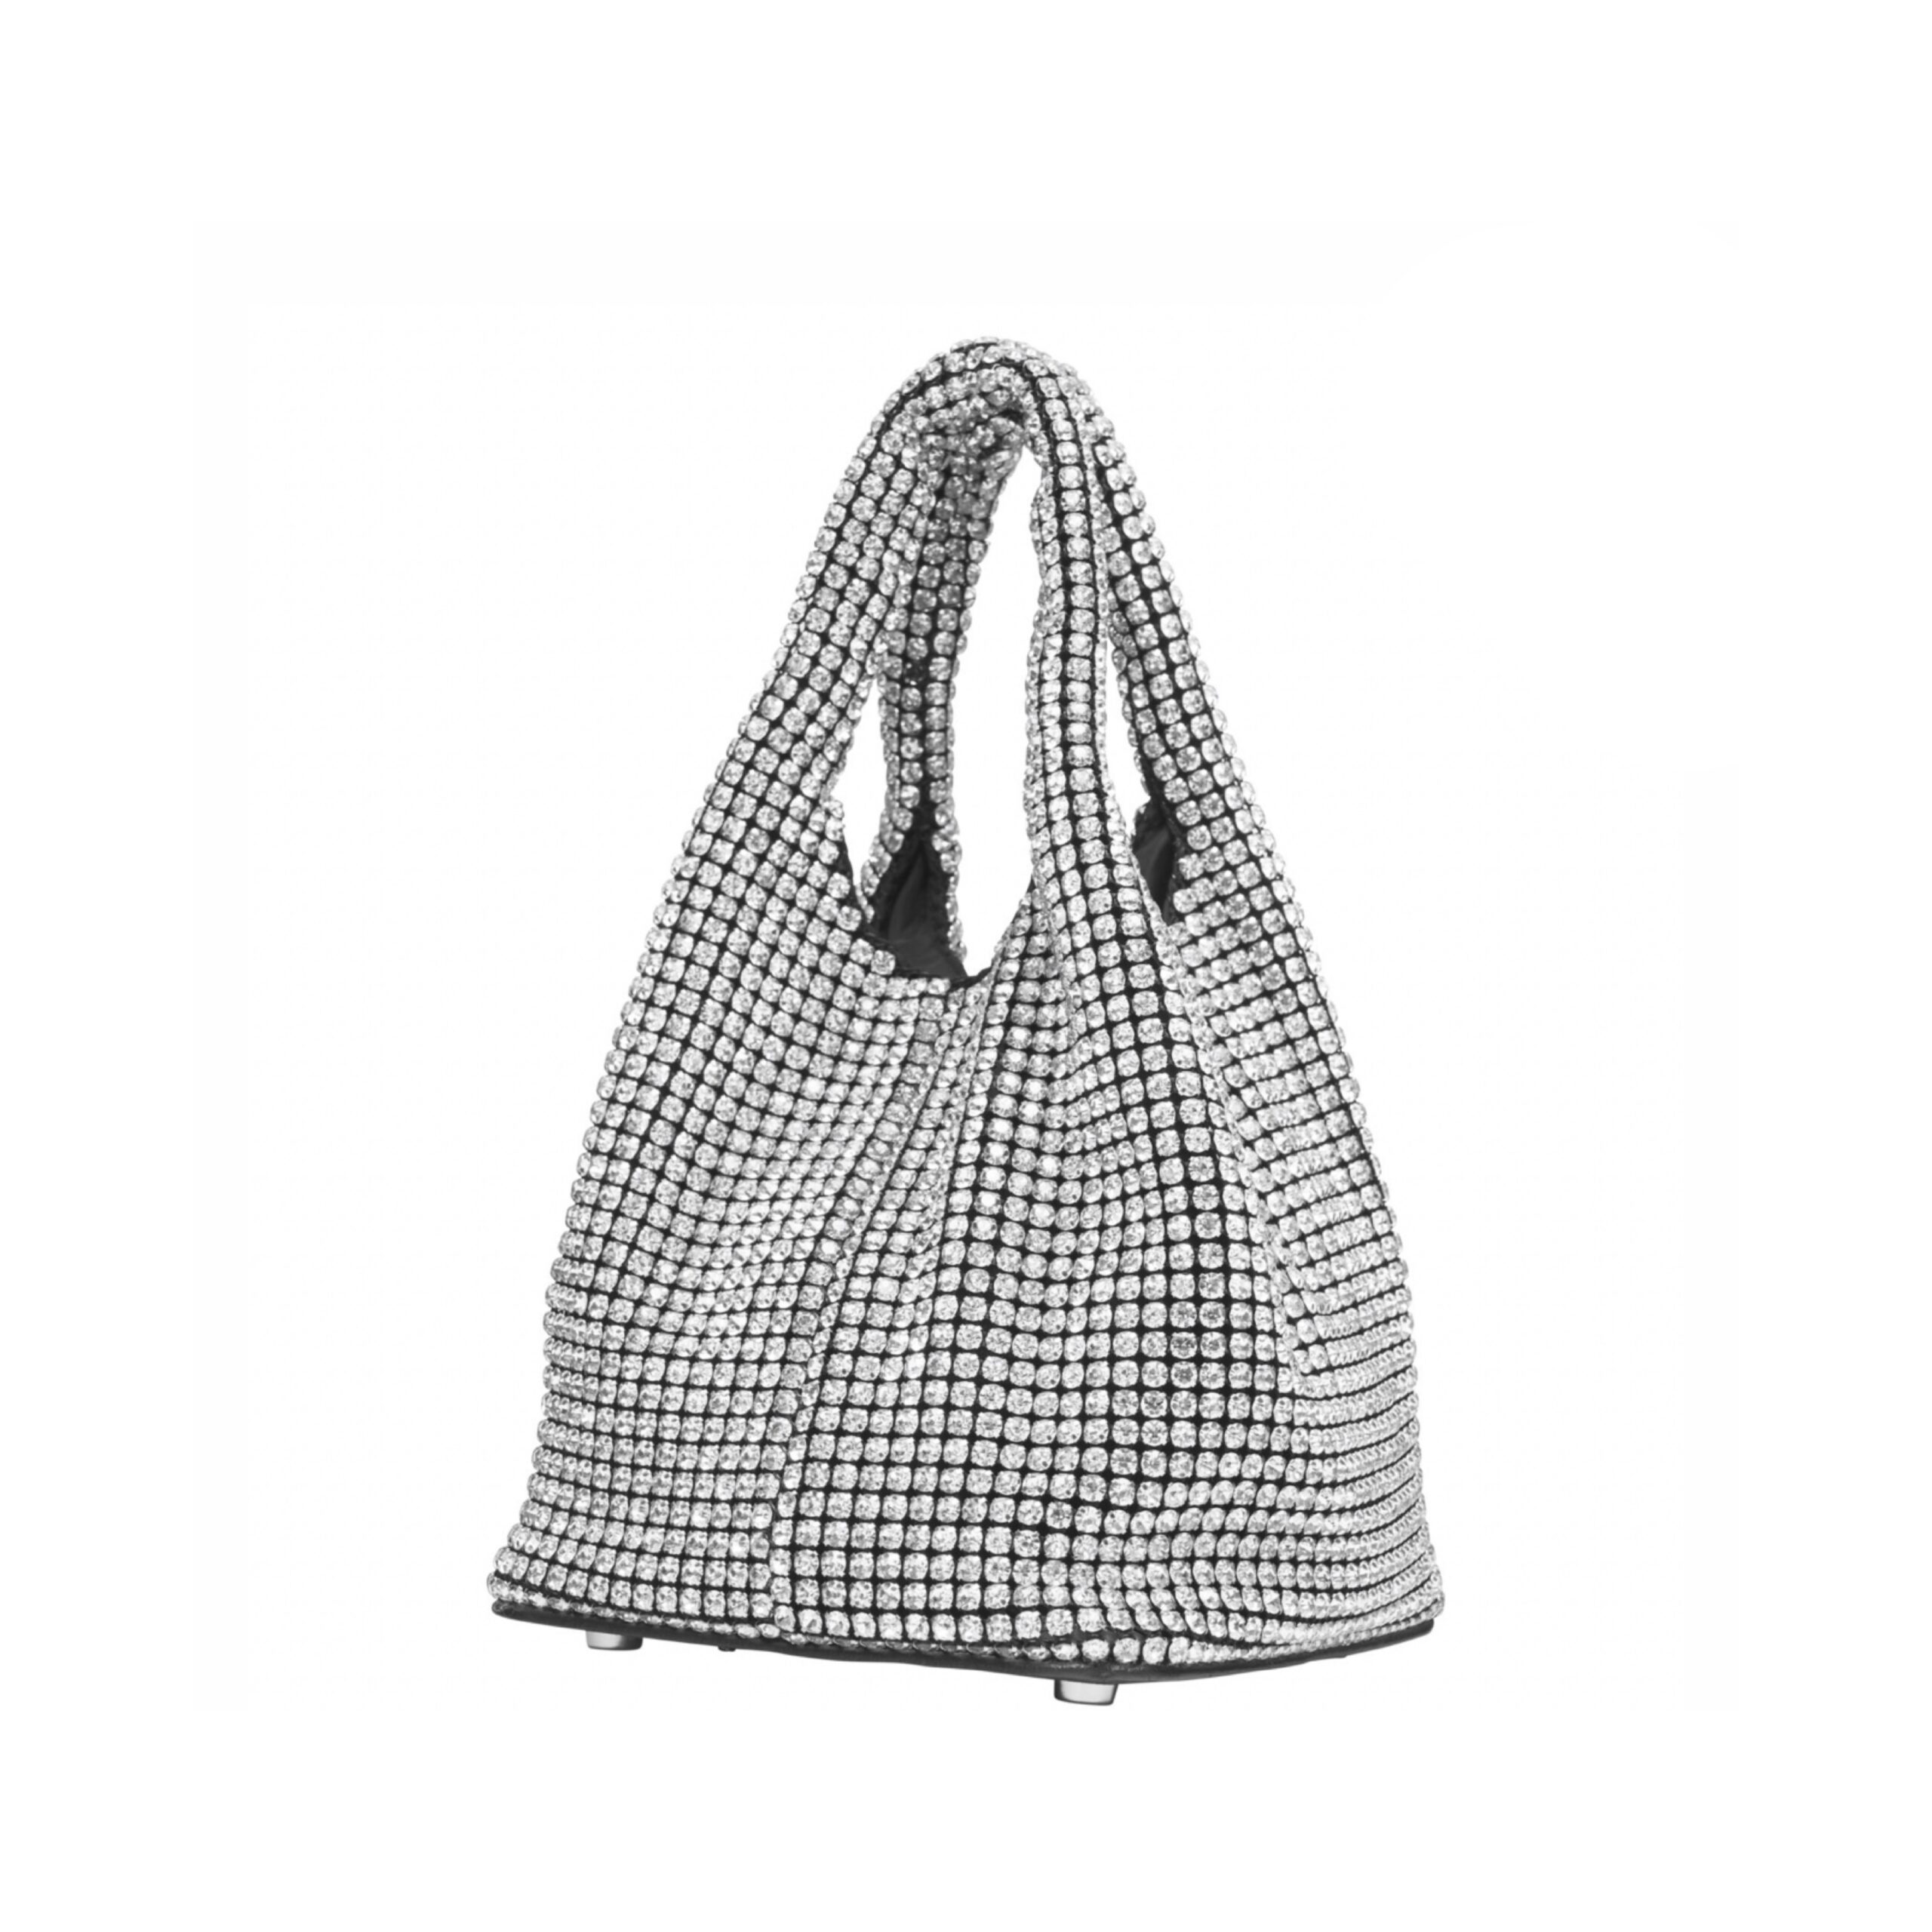 Silver Glitter Clutch Bag|Charlene|Jeanette Maree|